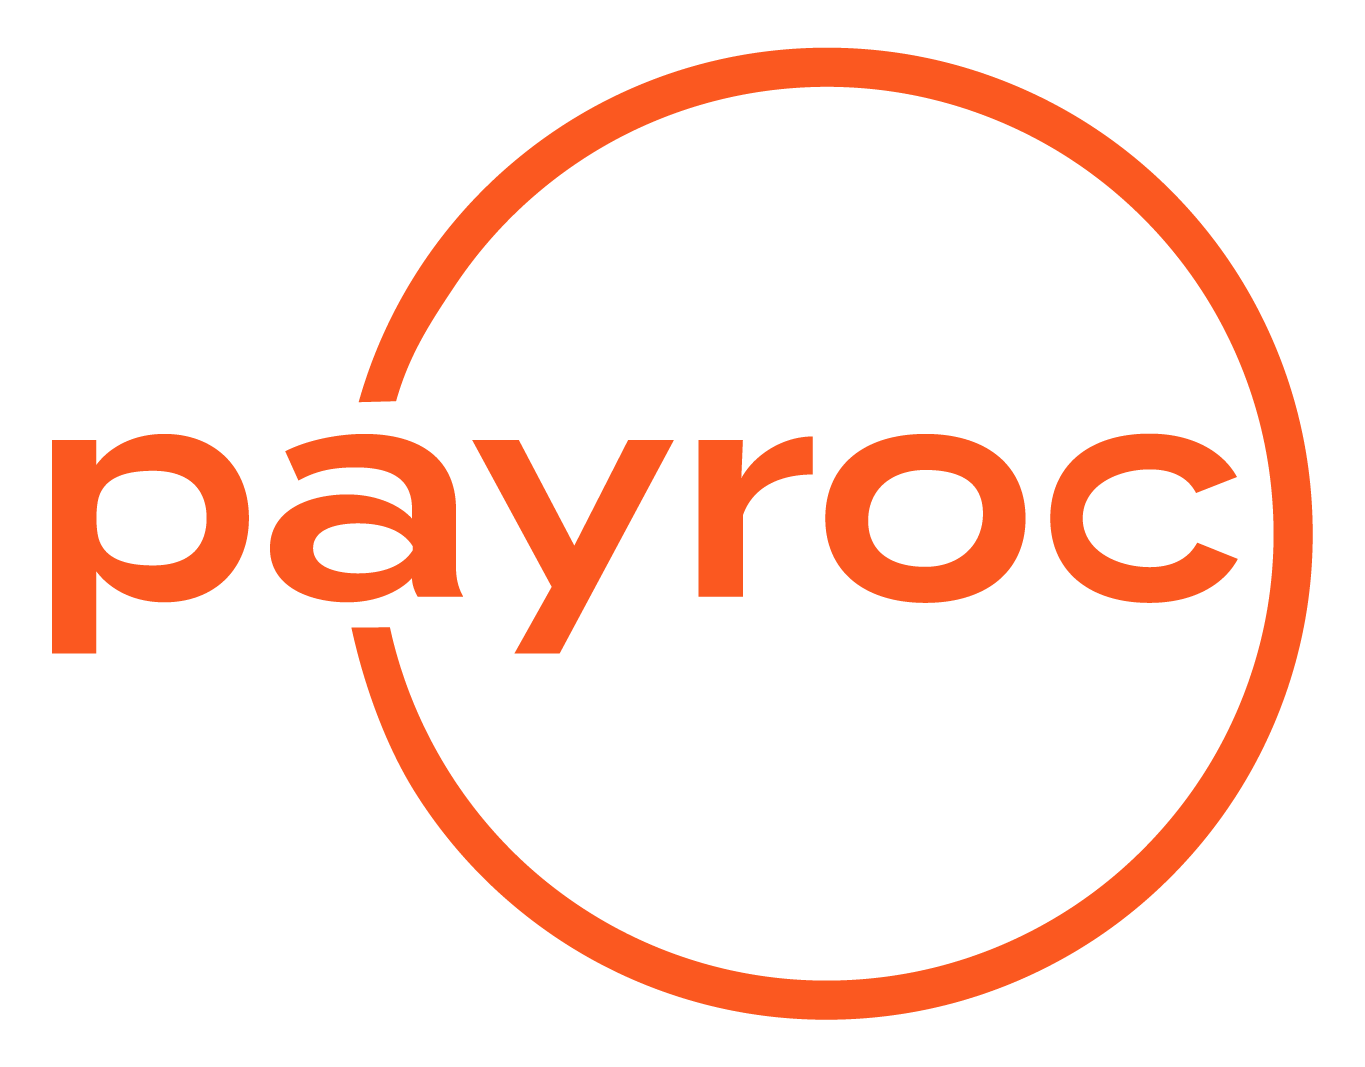 Payroc-logo-orange